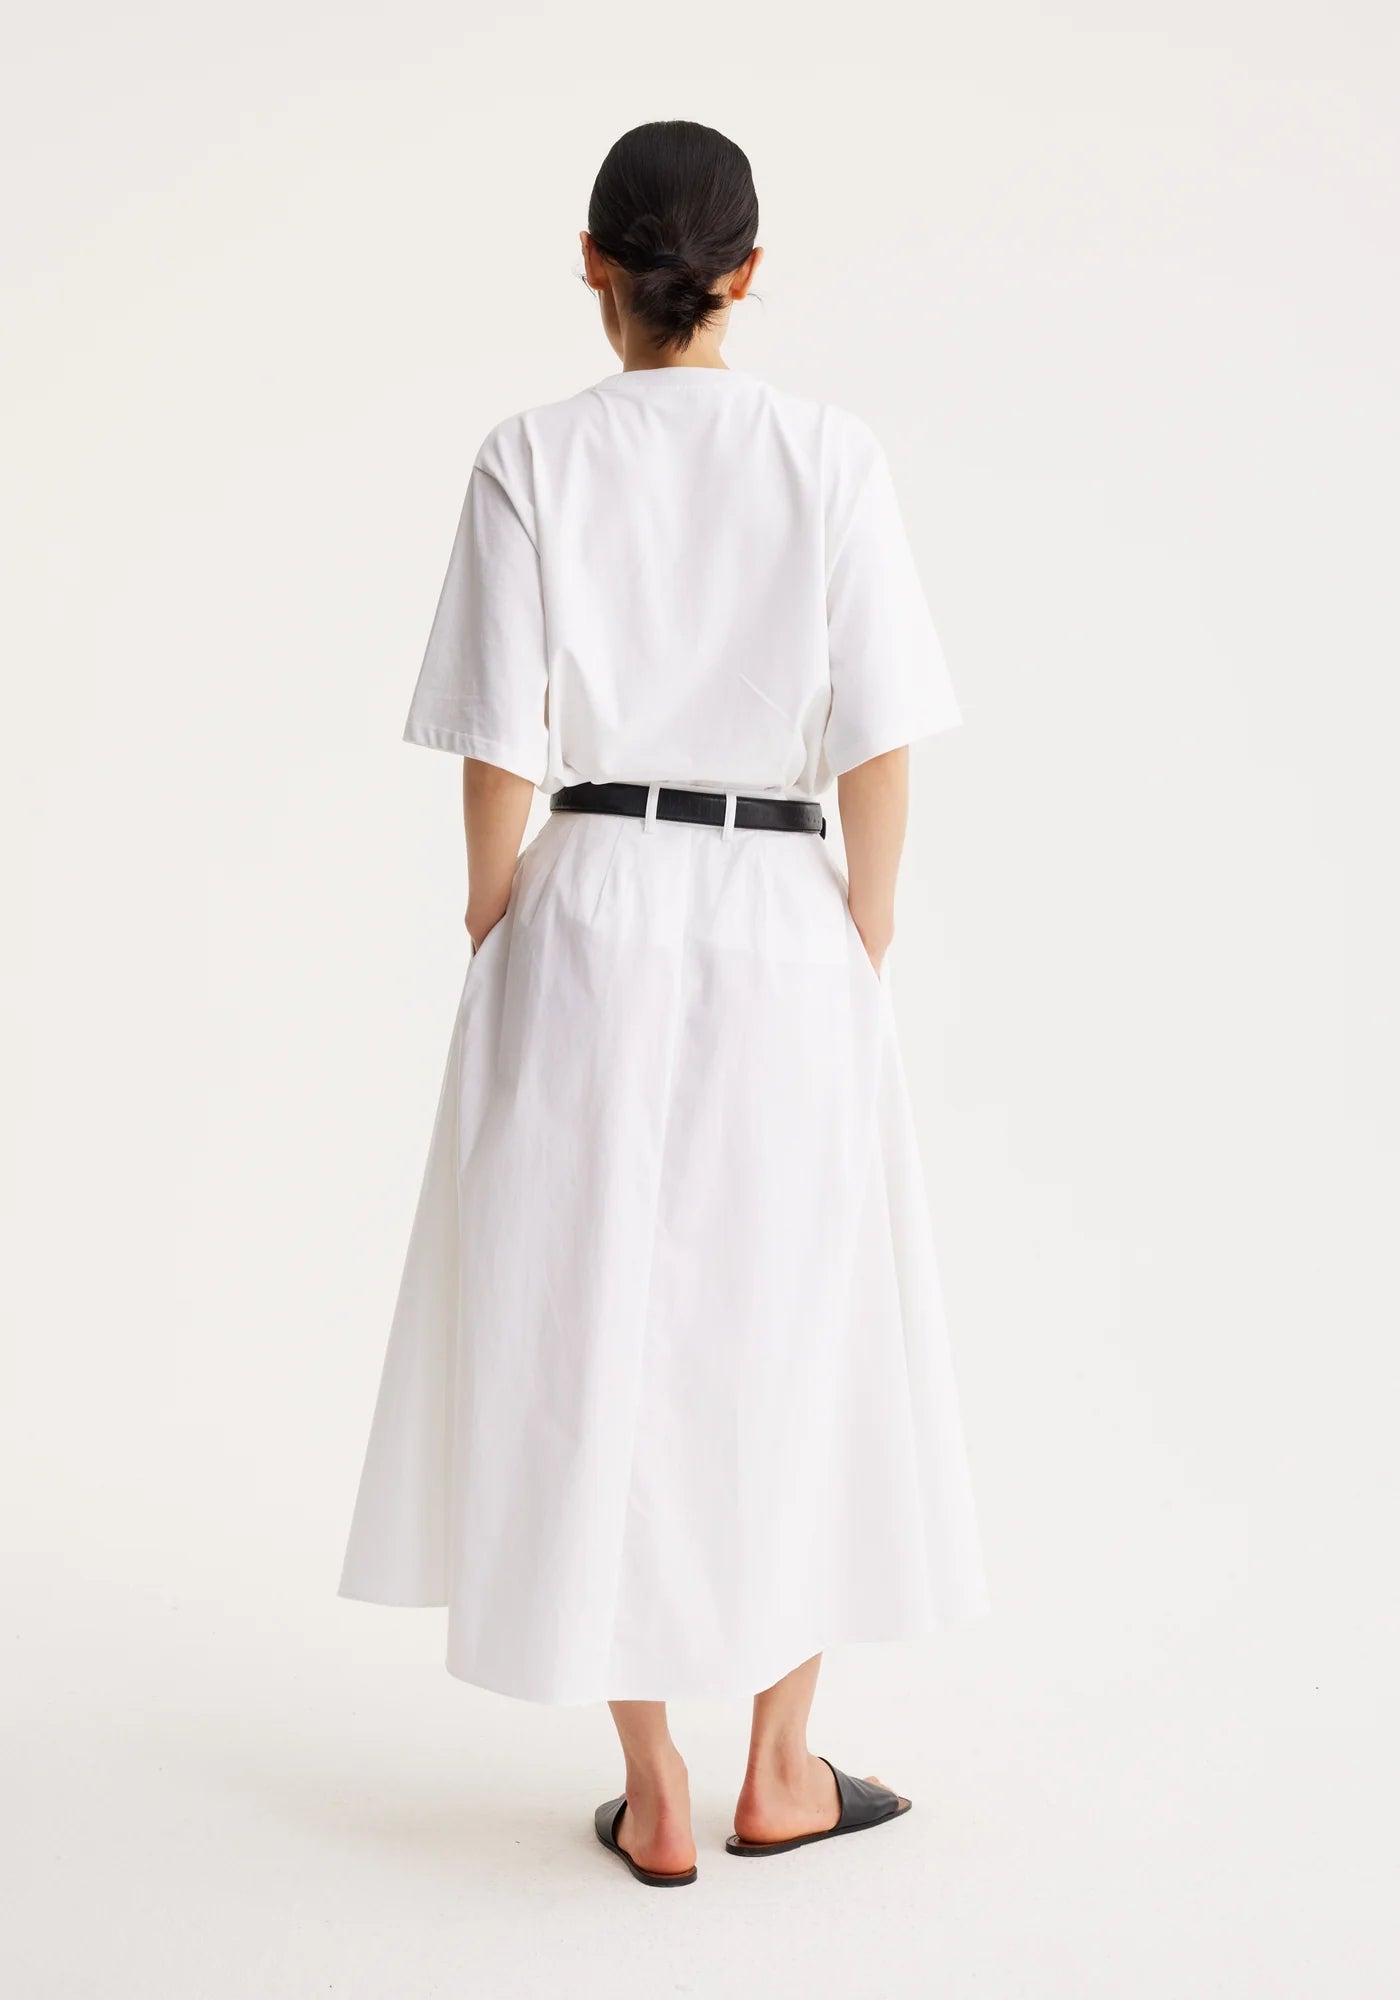 White cotton skirt